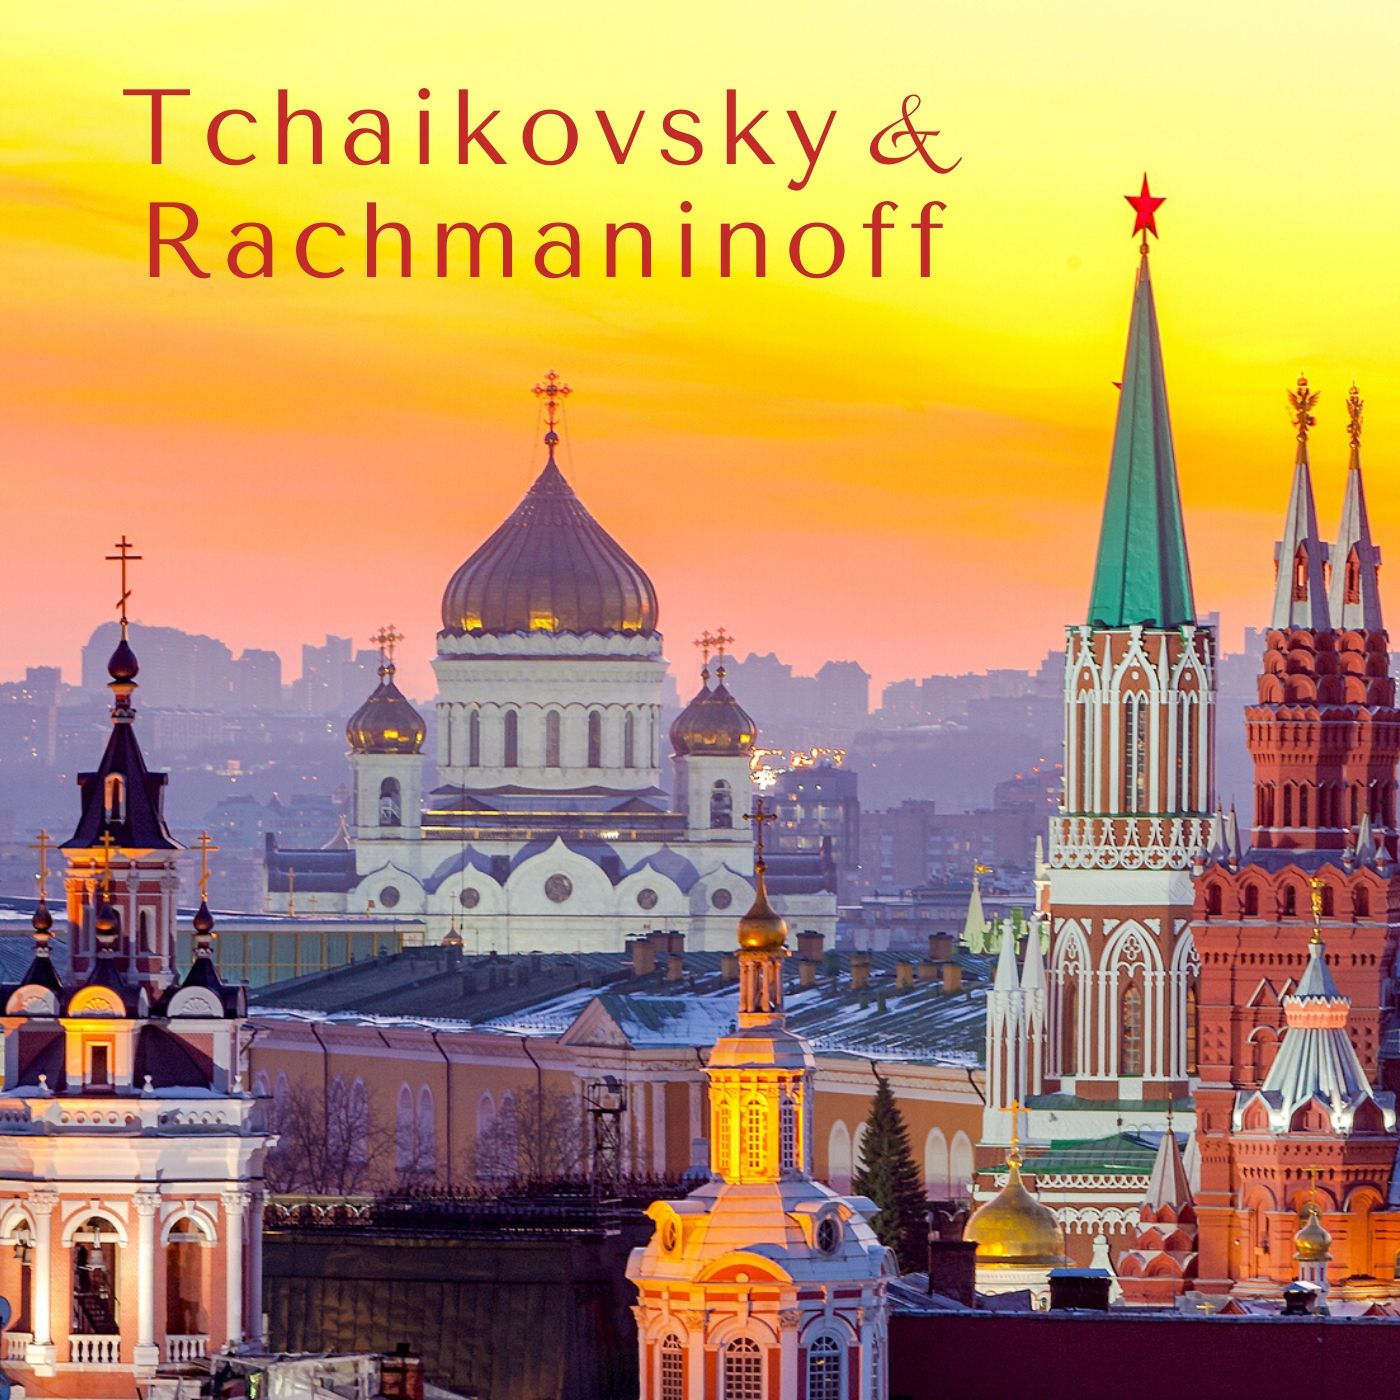 Tchaikovsky & Rachmaninoff - Russian Classical Music 